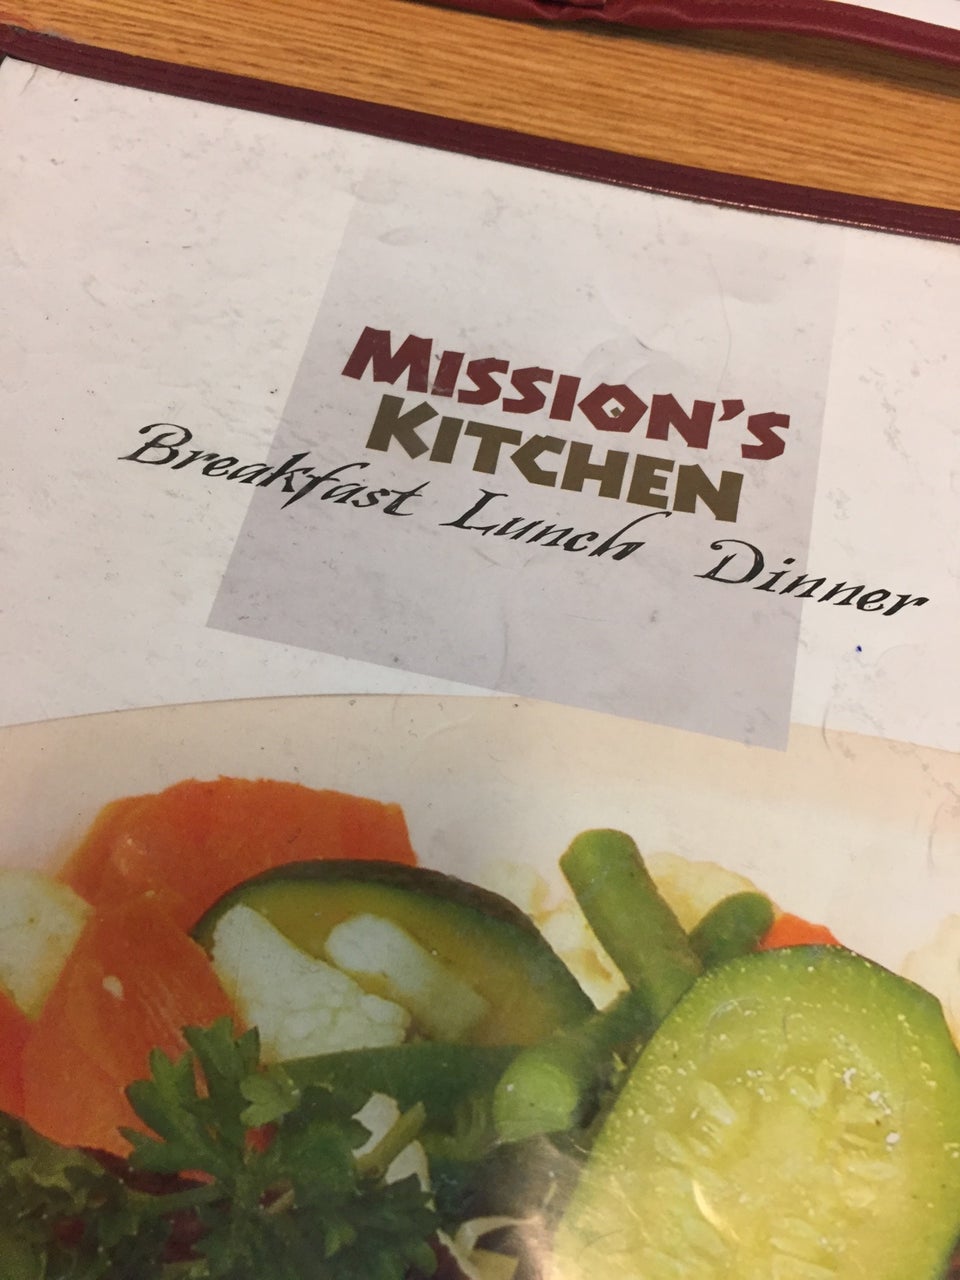 Photo of Mission's Kitchen